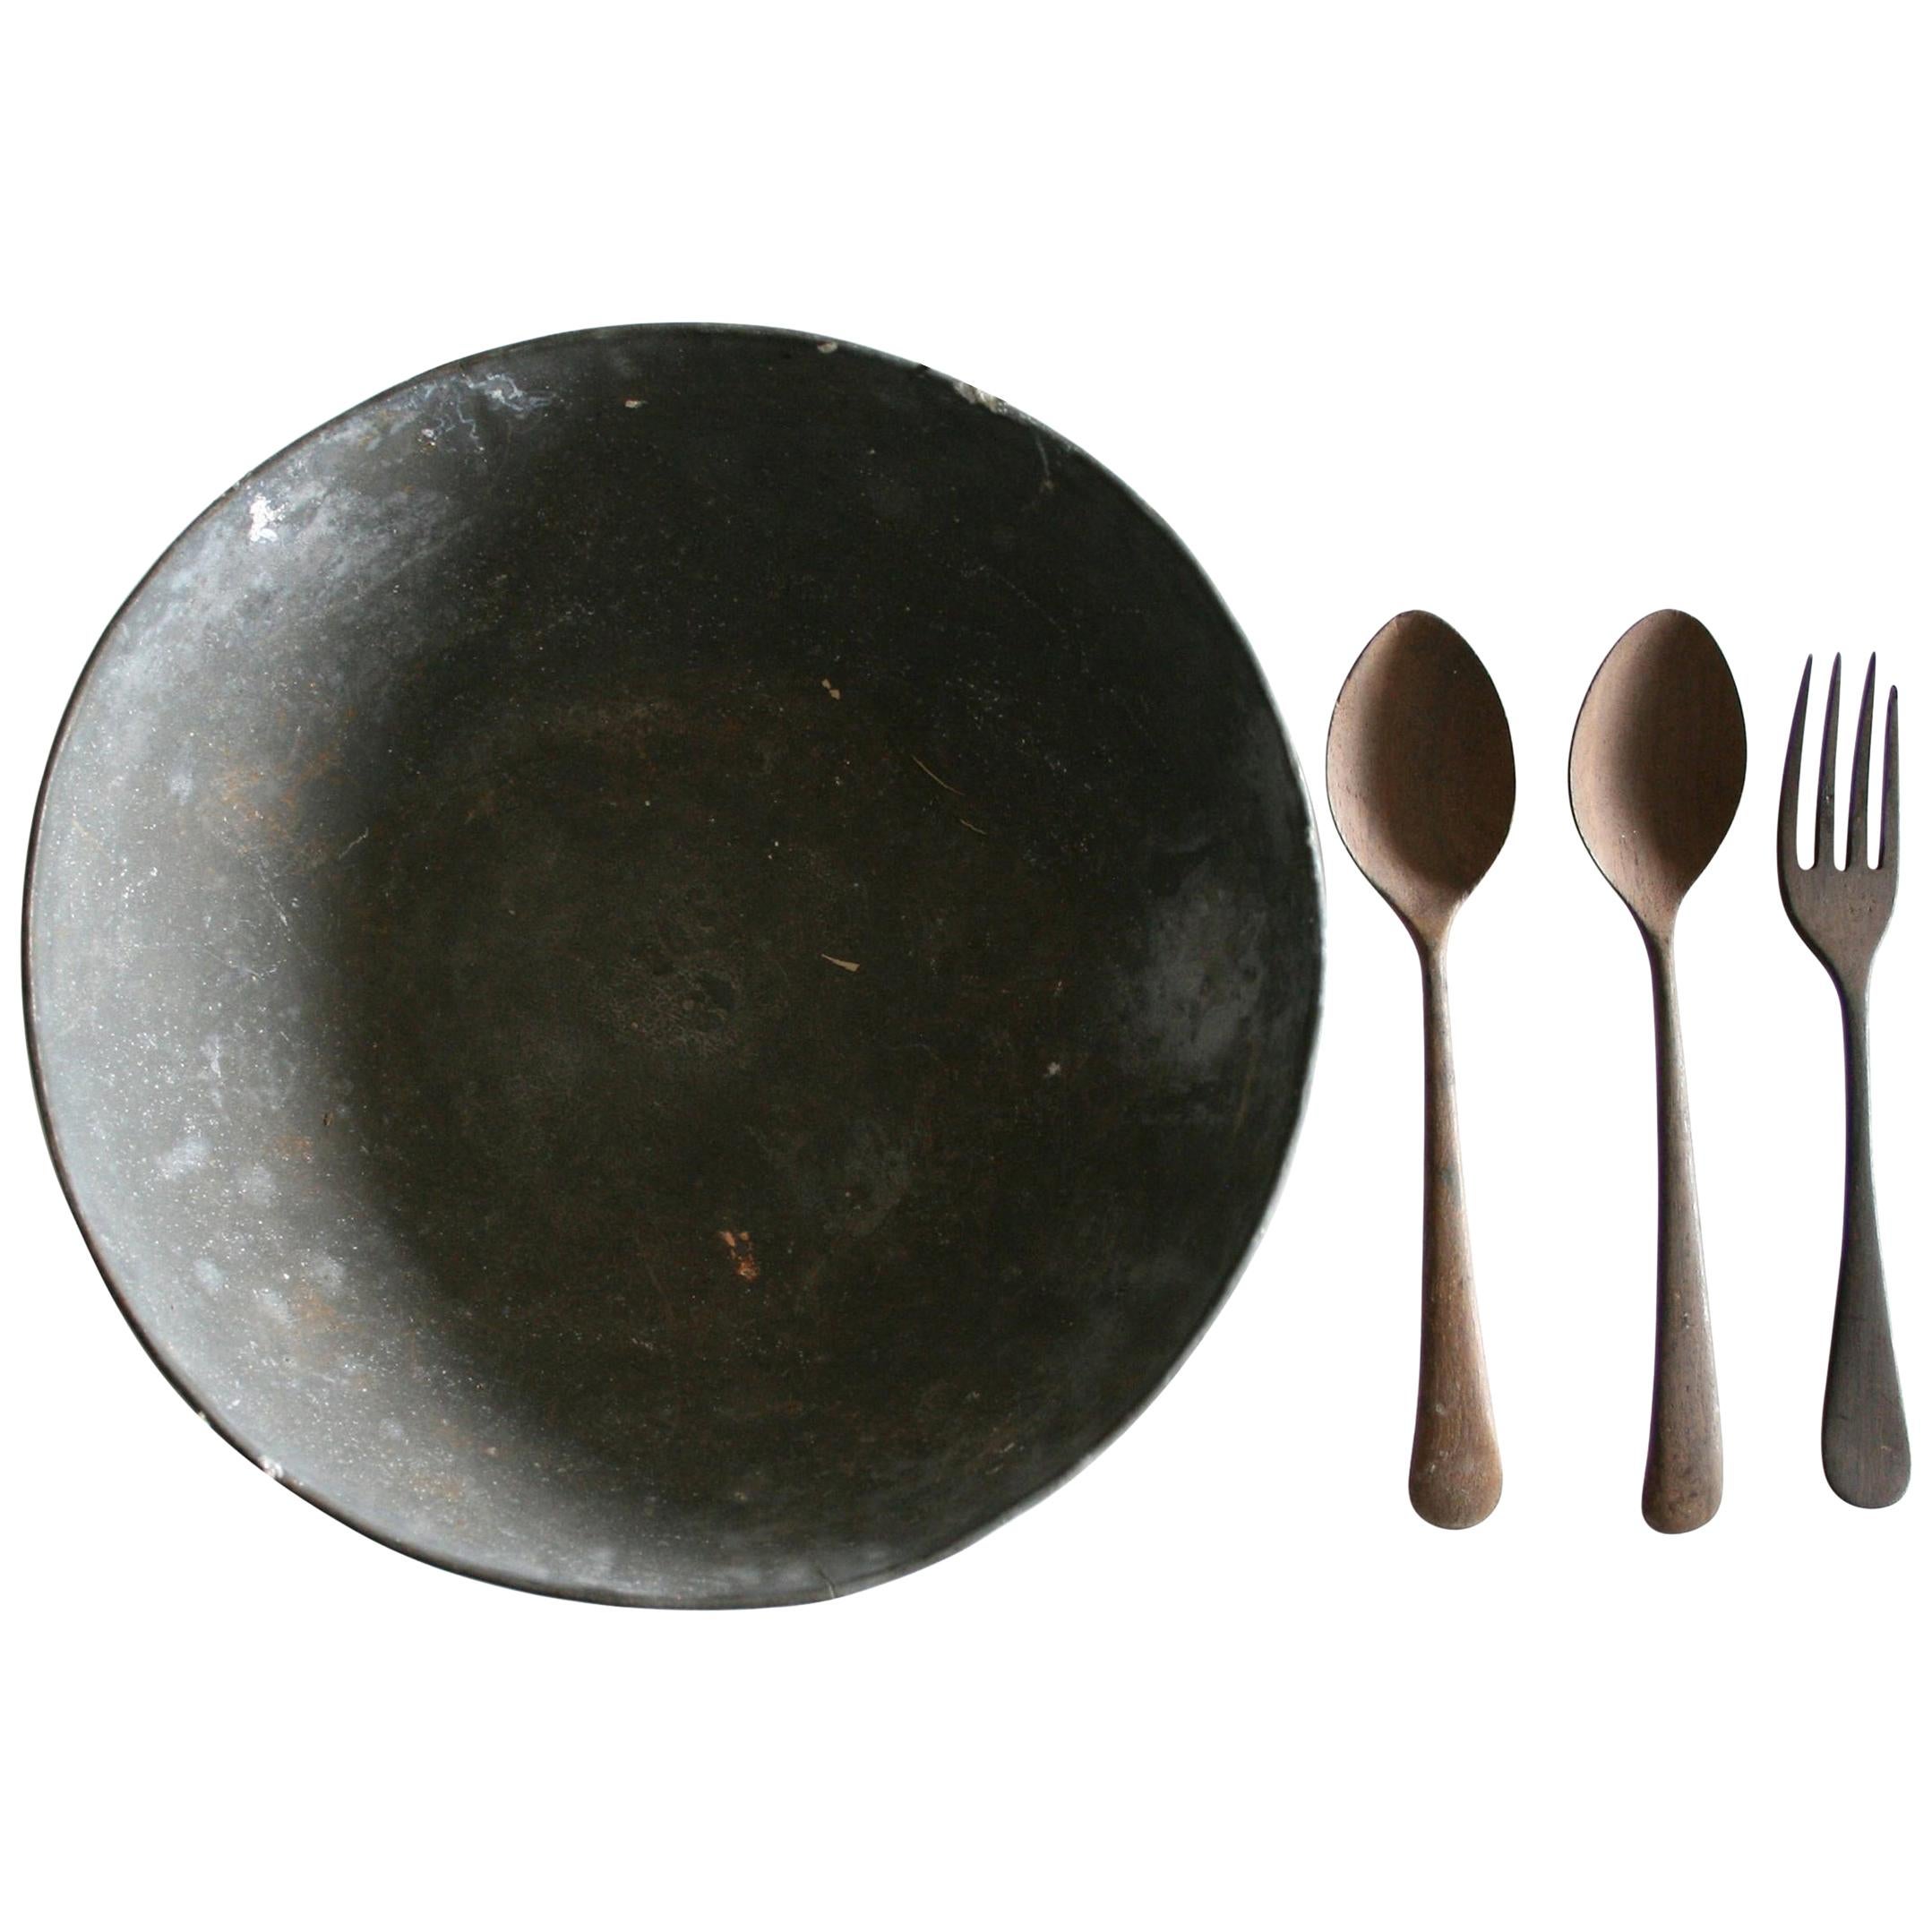 Mahatma Gandhi's Vintage 1940s Metal Prison Bowl and Wooden Fork and Spoons For Sale